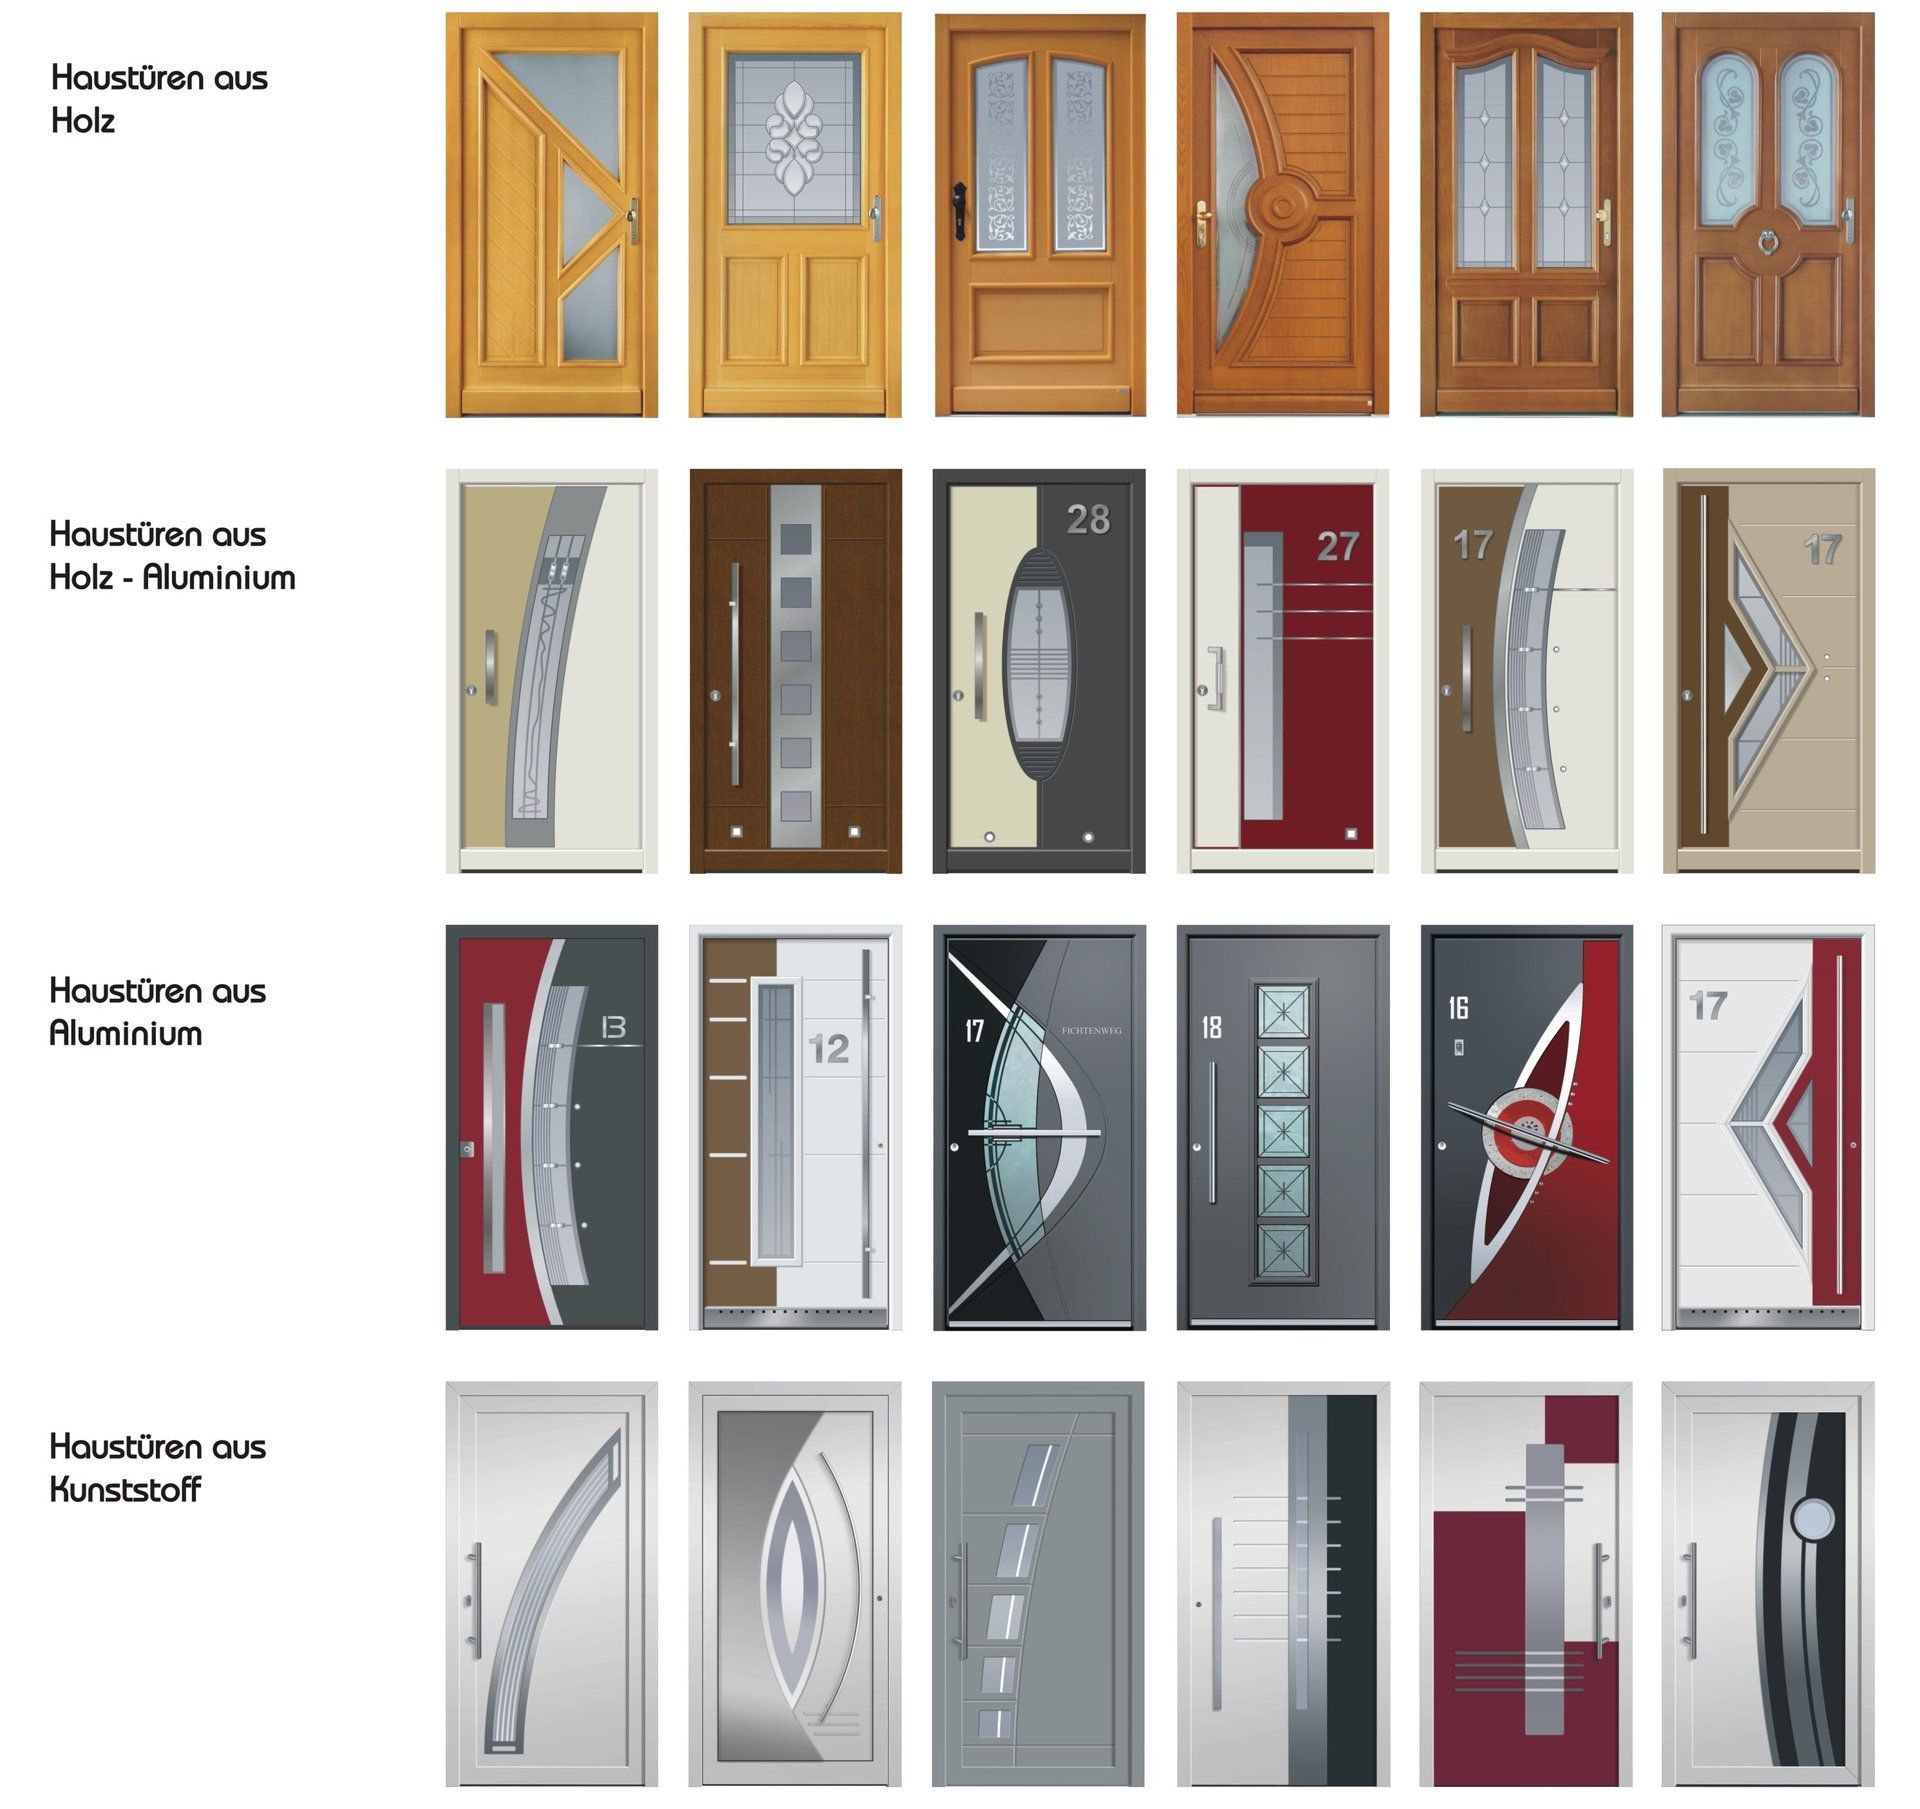 Übersicht Auswahl Haustüren aus Holz, Holz-alu, Kunststoff, Aluminium